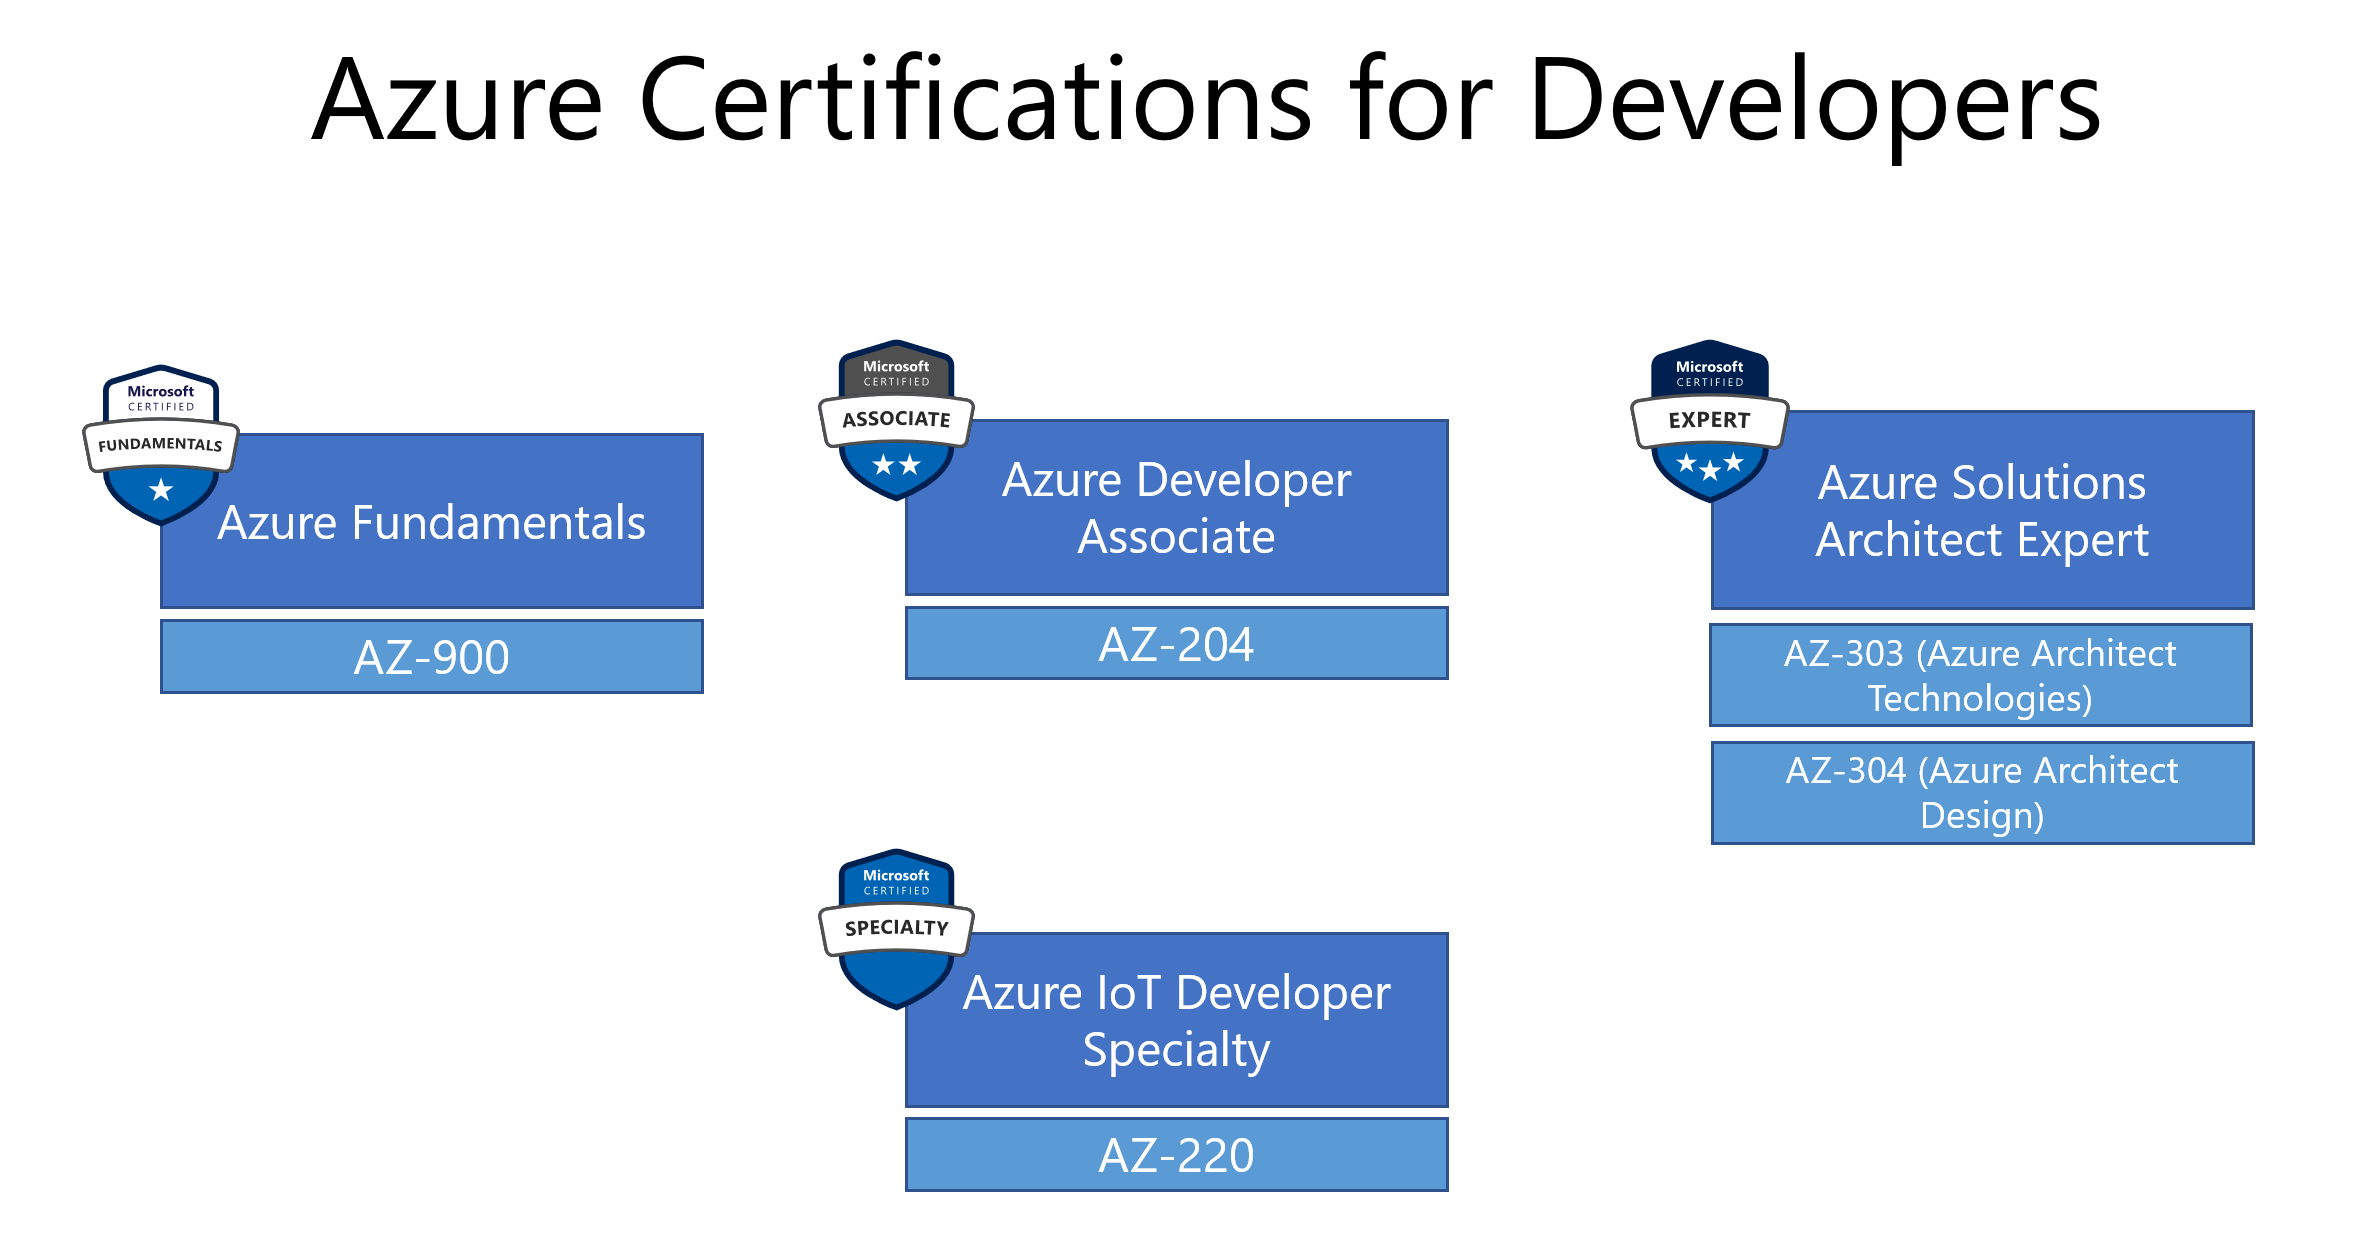 Microsoft Certified Azure Iot Developer Specialty Salary The Best